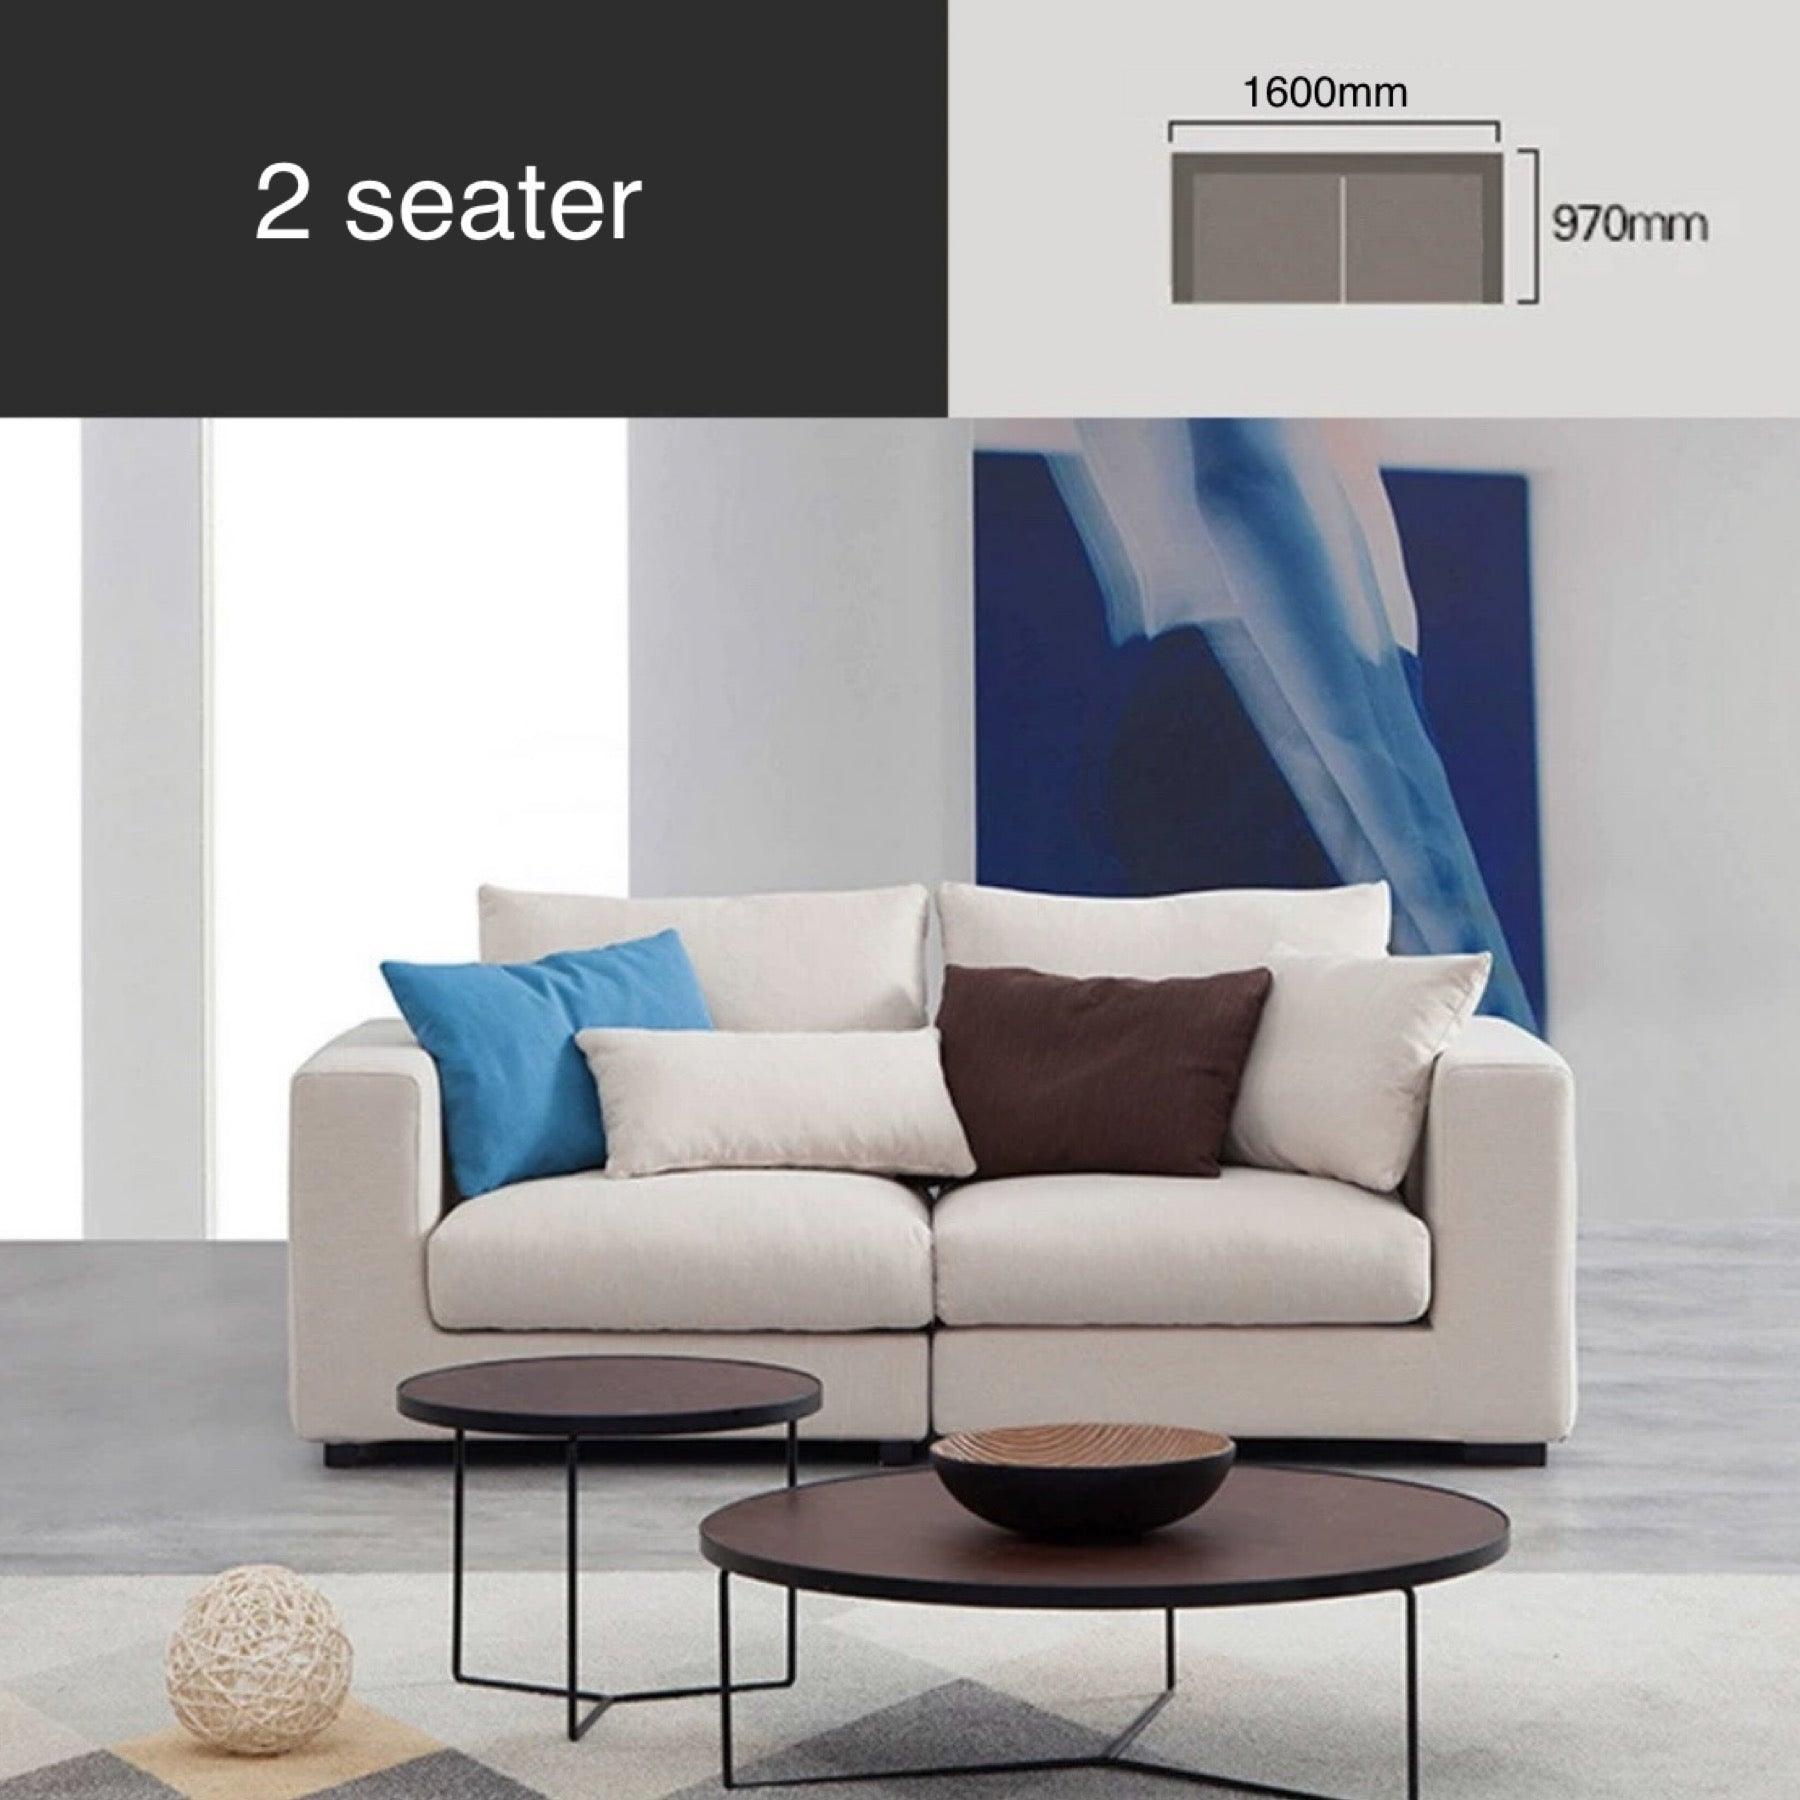 home-atelier-f31a Cotton Linen Fabric / 2 seater/ Length 160cm / Beige Bellini Sectional L-shape Corner Seat Sofa